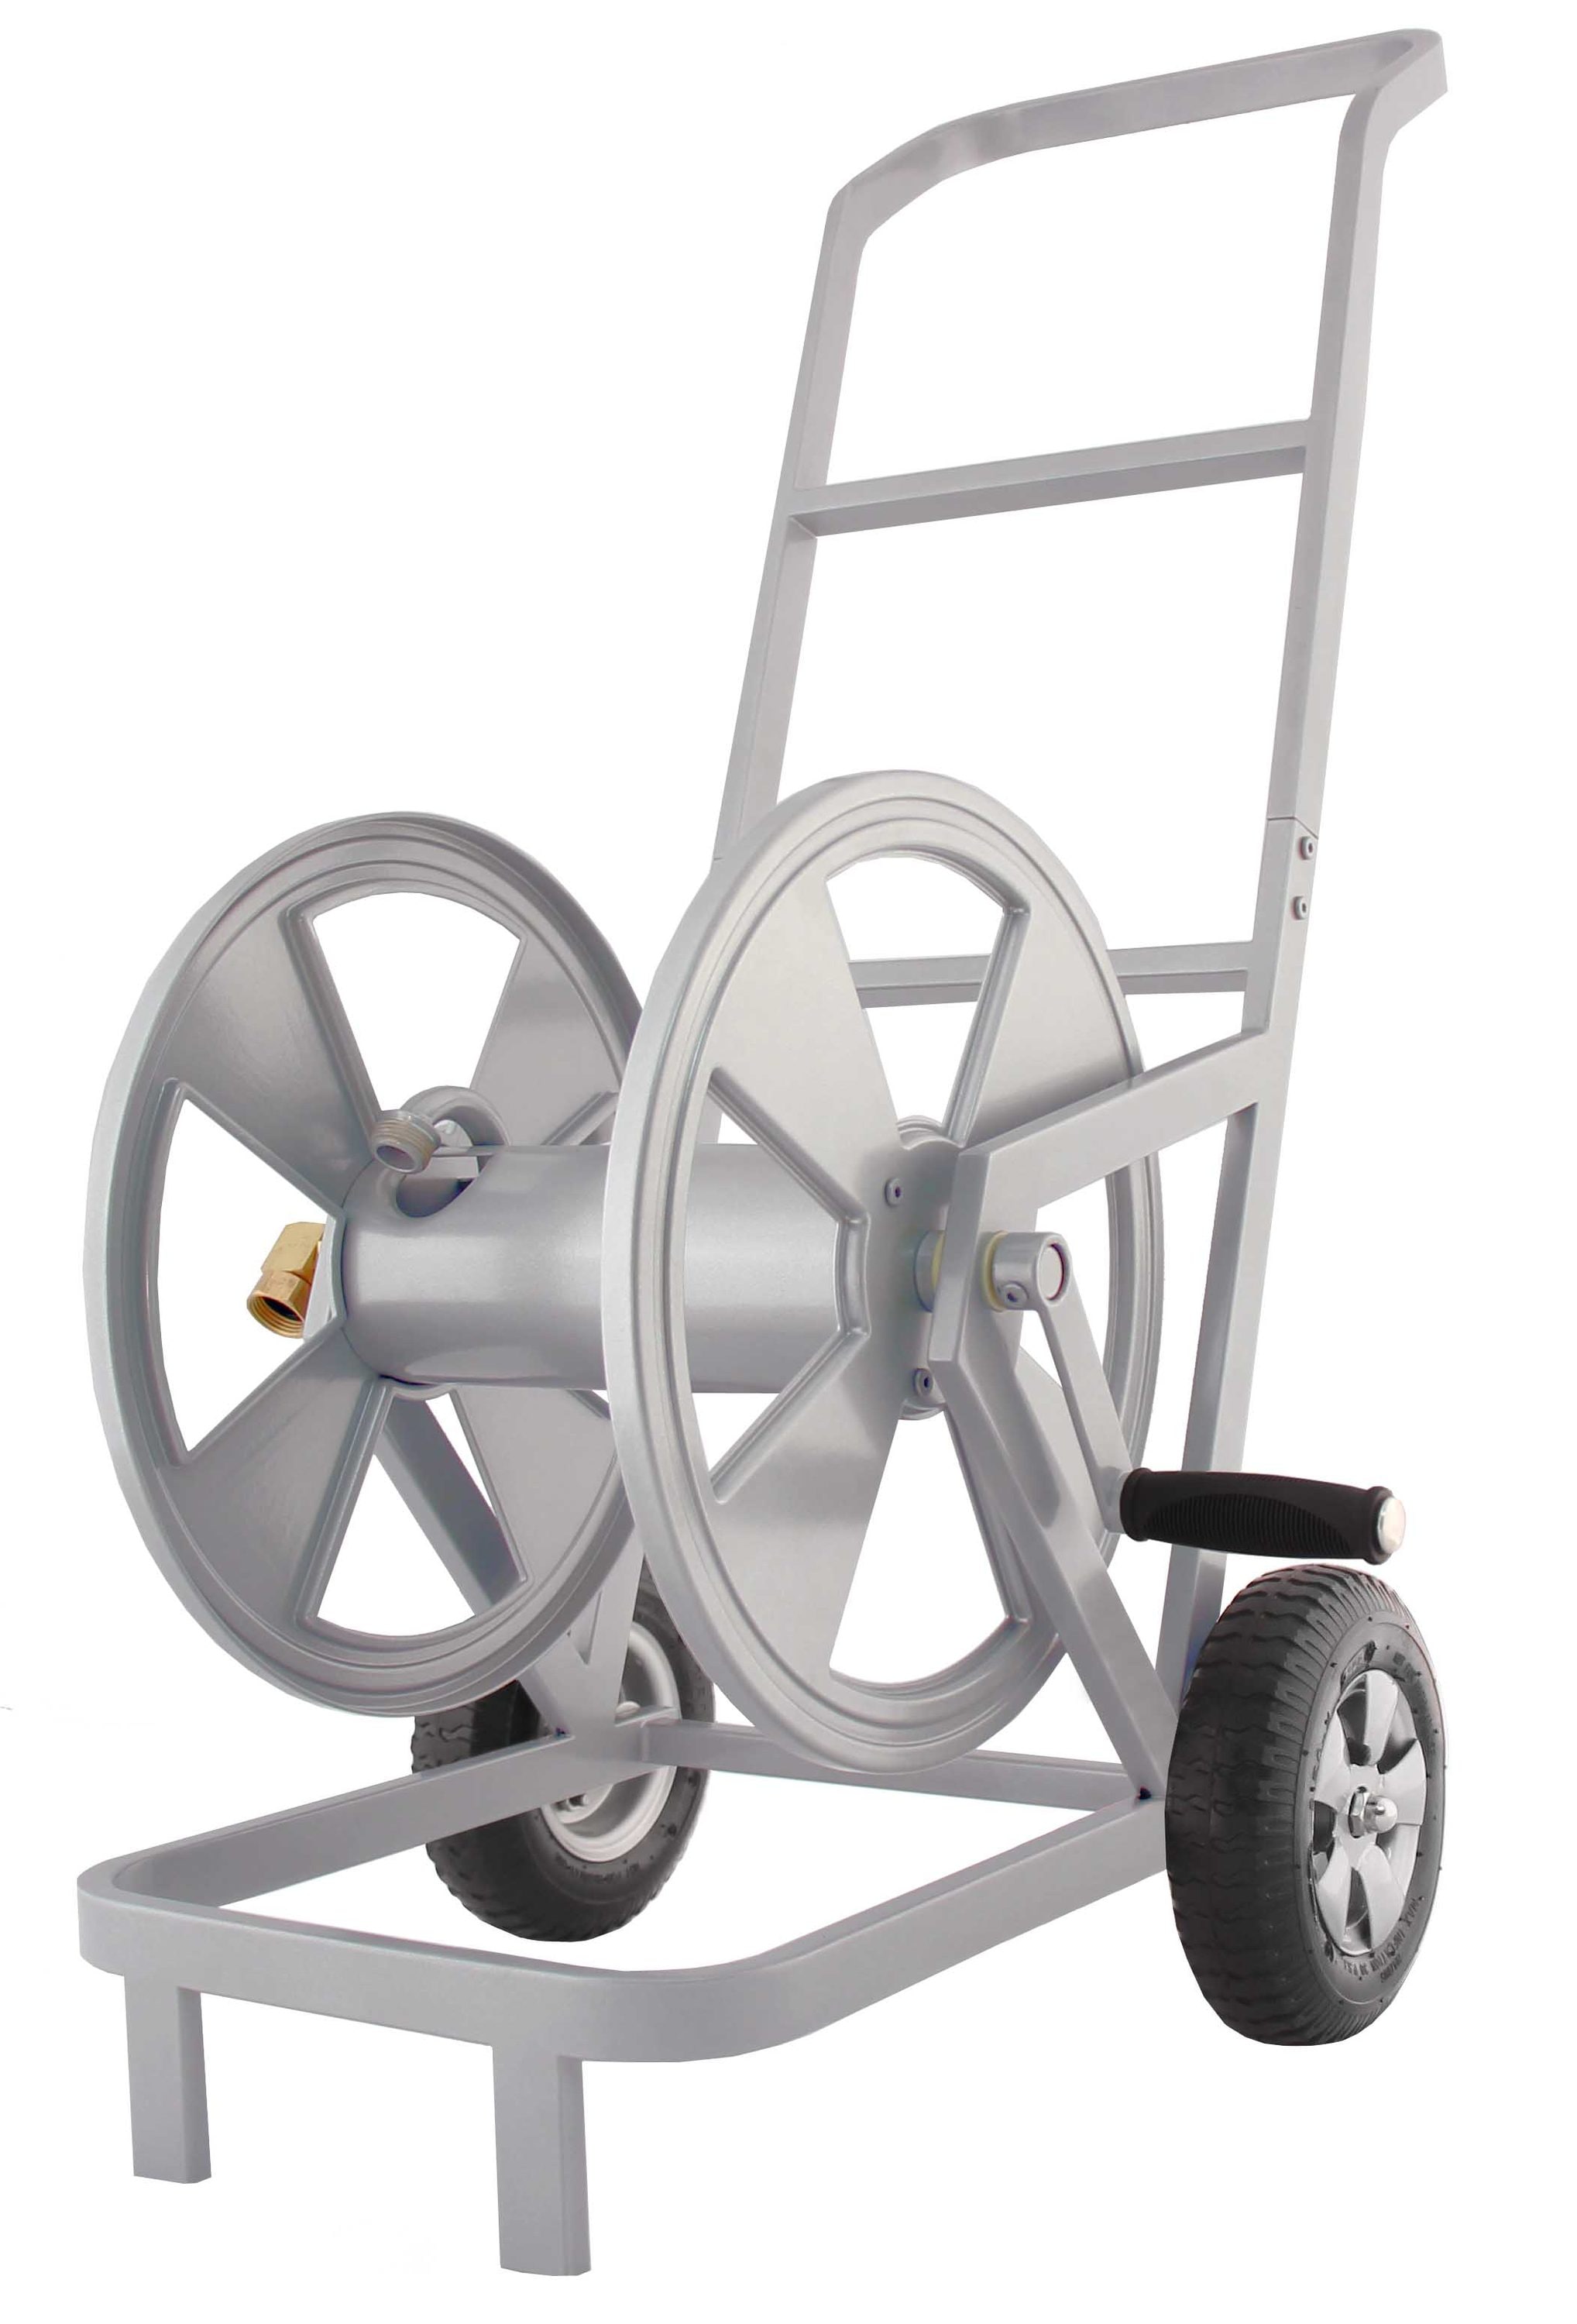 Yard Butler Two Wheel Garden Steel Hose Reel Cart - 200' & Reviews